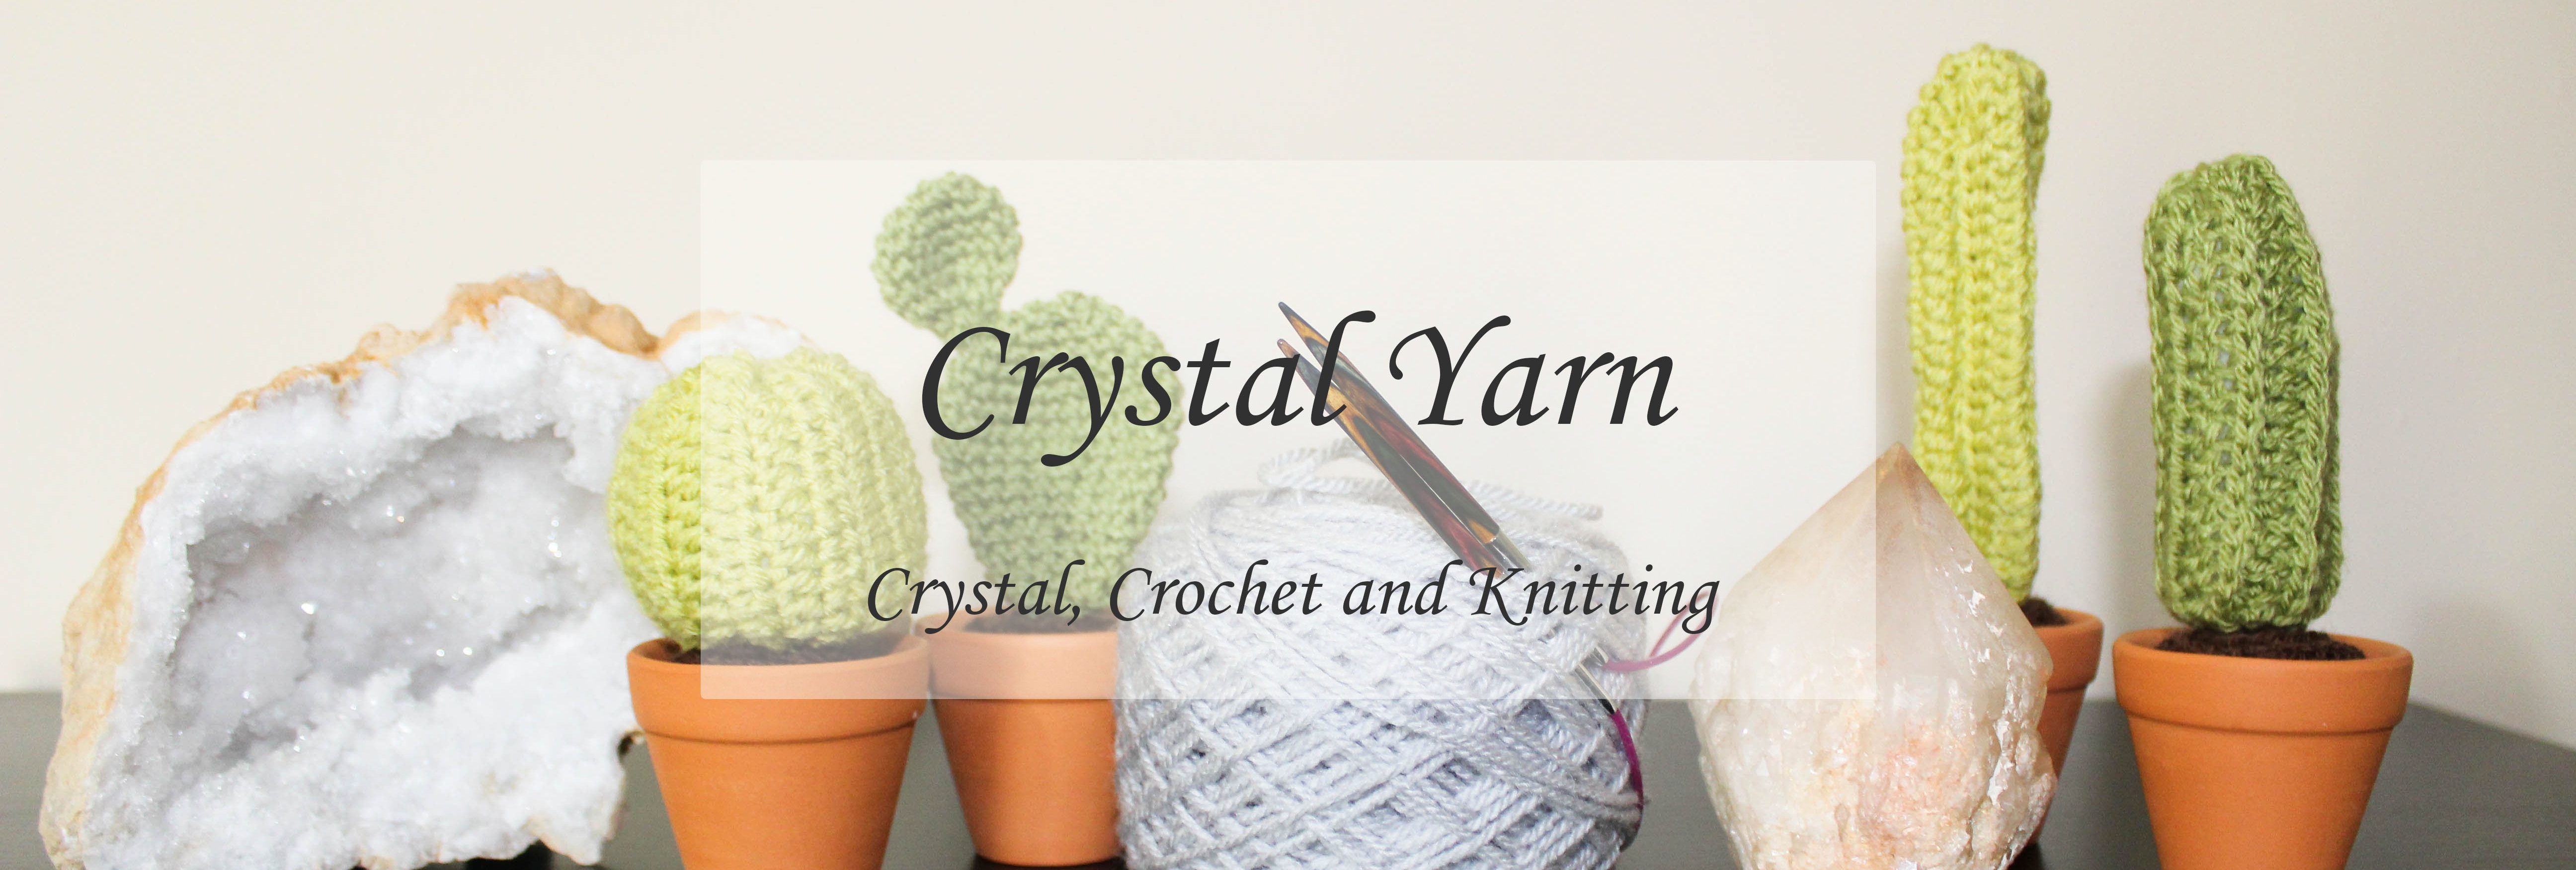 Crystal Yarn